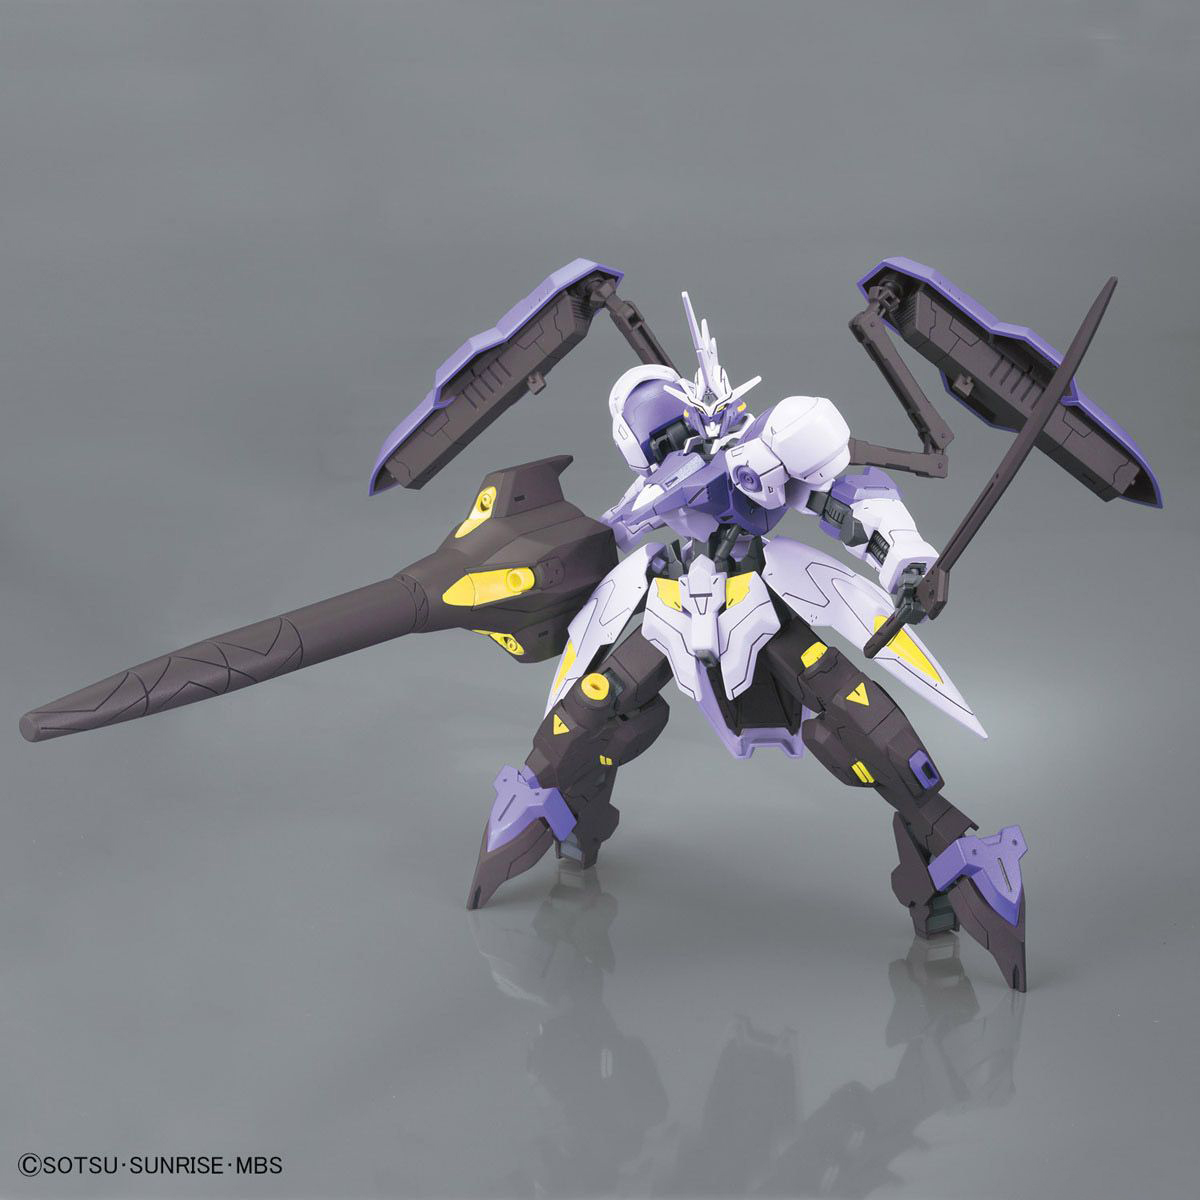 HG 1/144 Gundam Kimaris Vidar - Release Info, Box art and Official Images